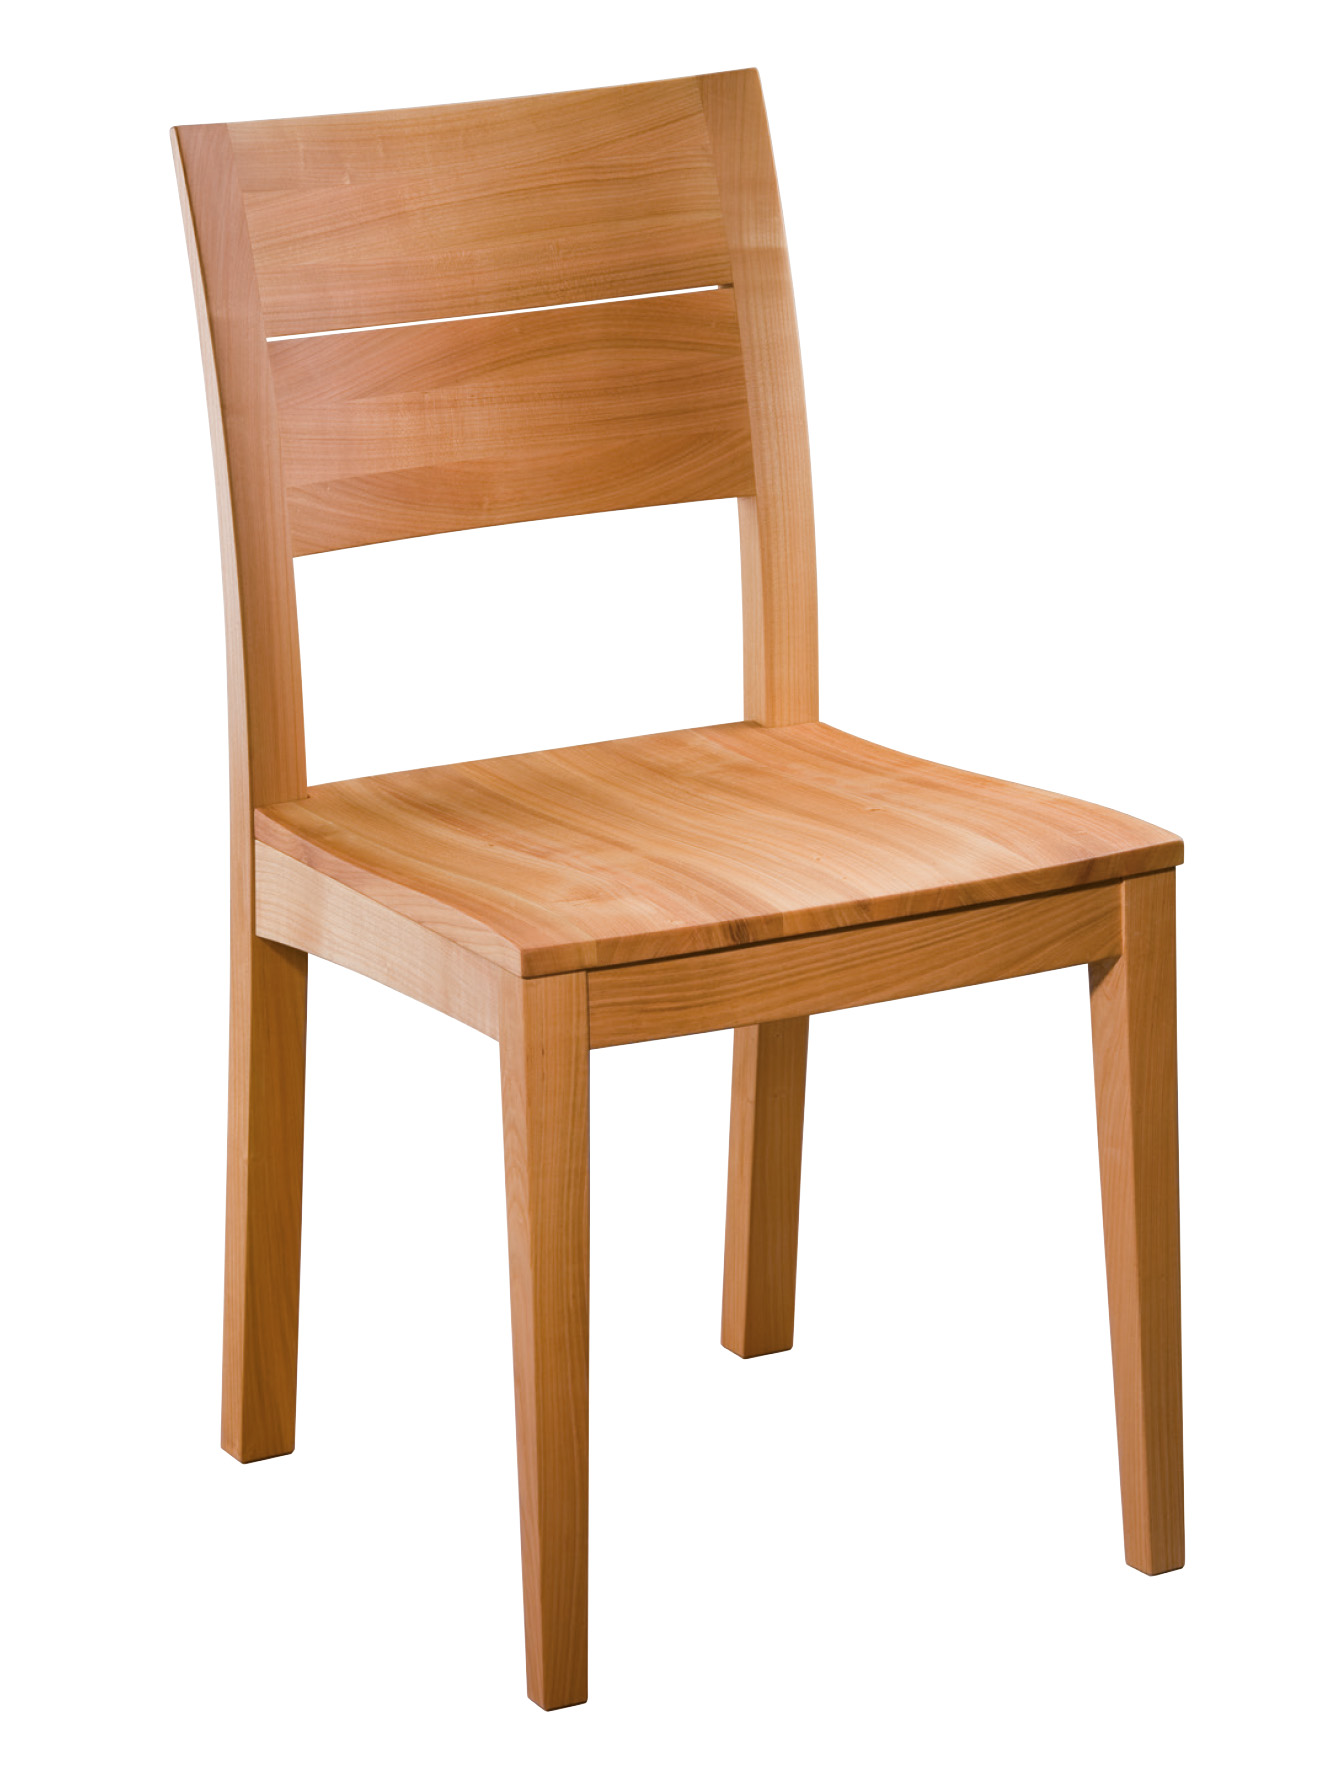 CARESSE CLASSIC Stuhl mit körpergerecht ausgeformtem Holzsitz